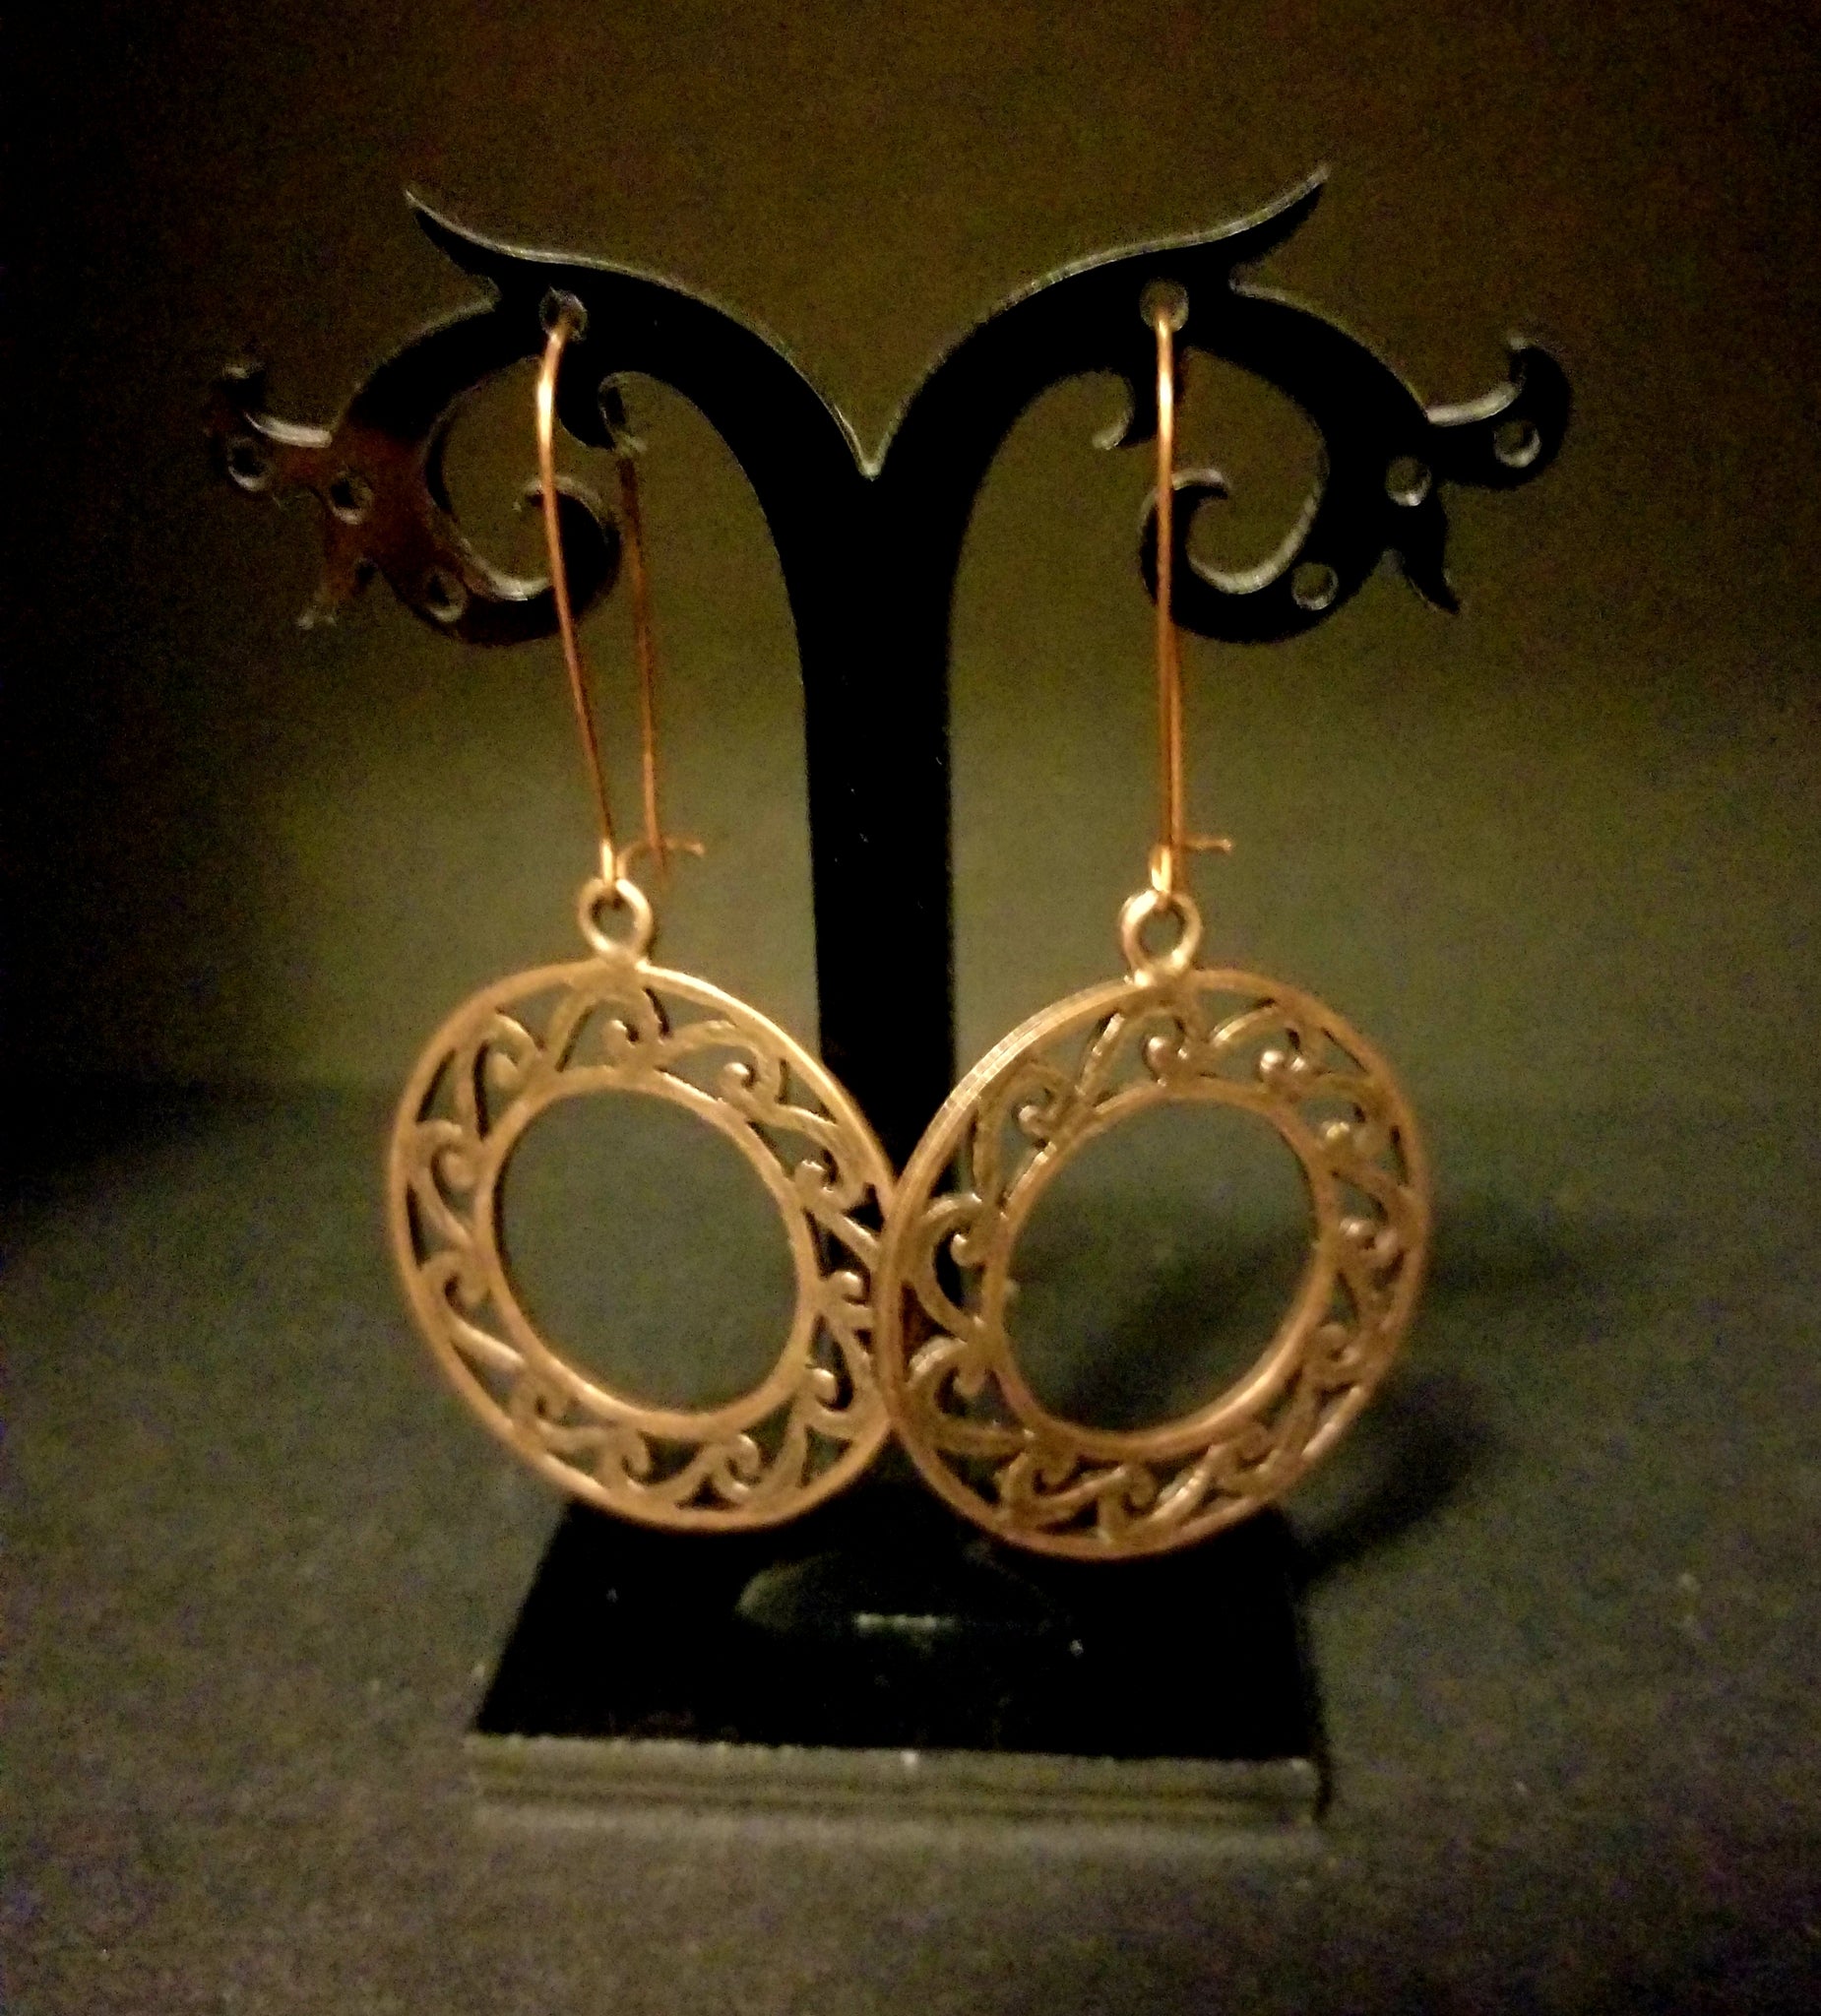 Normandy Antique Copper Earrings